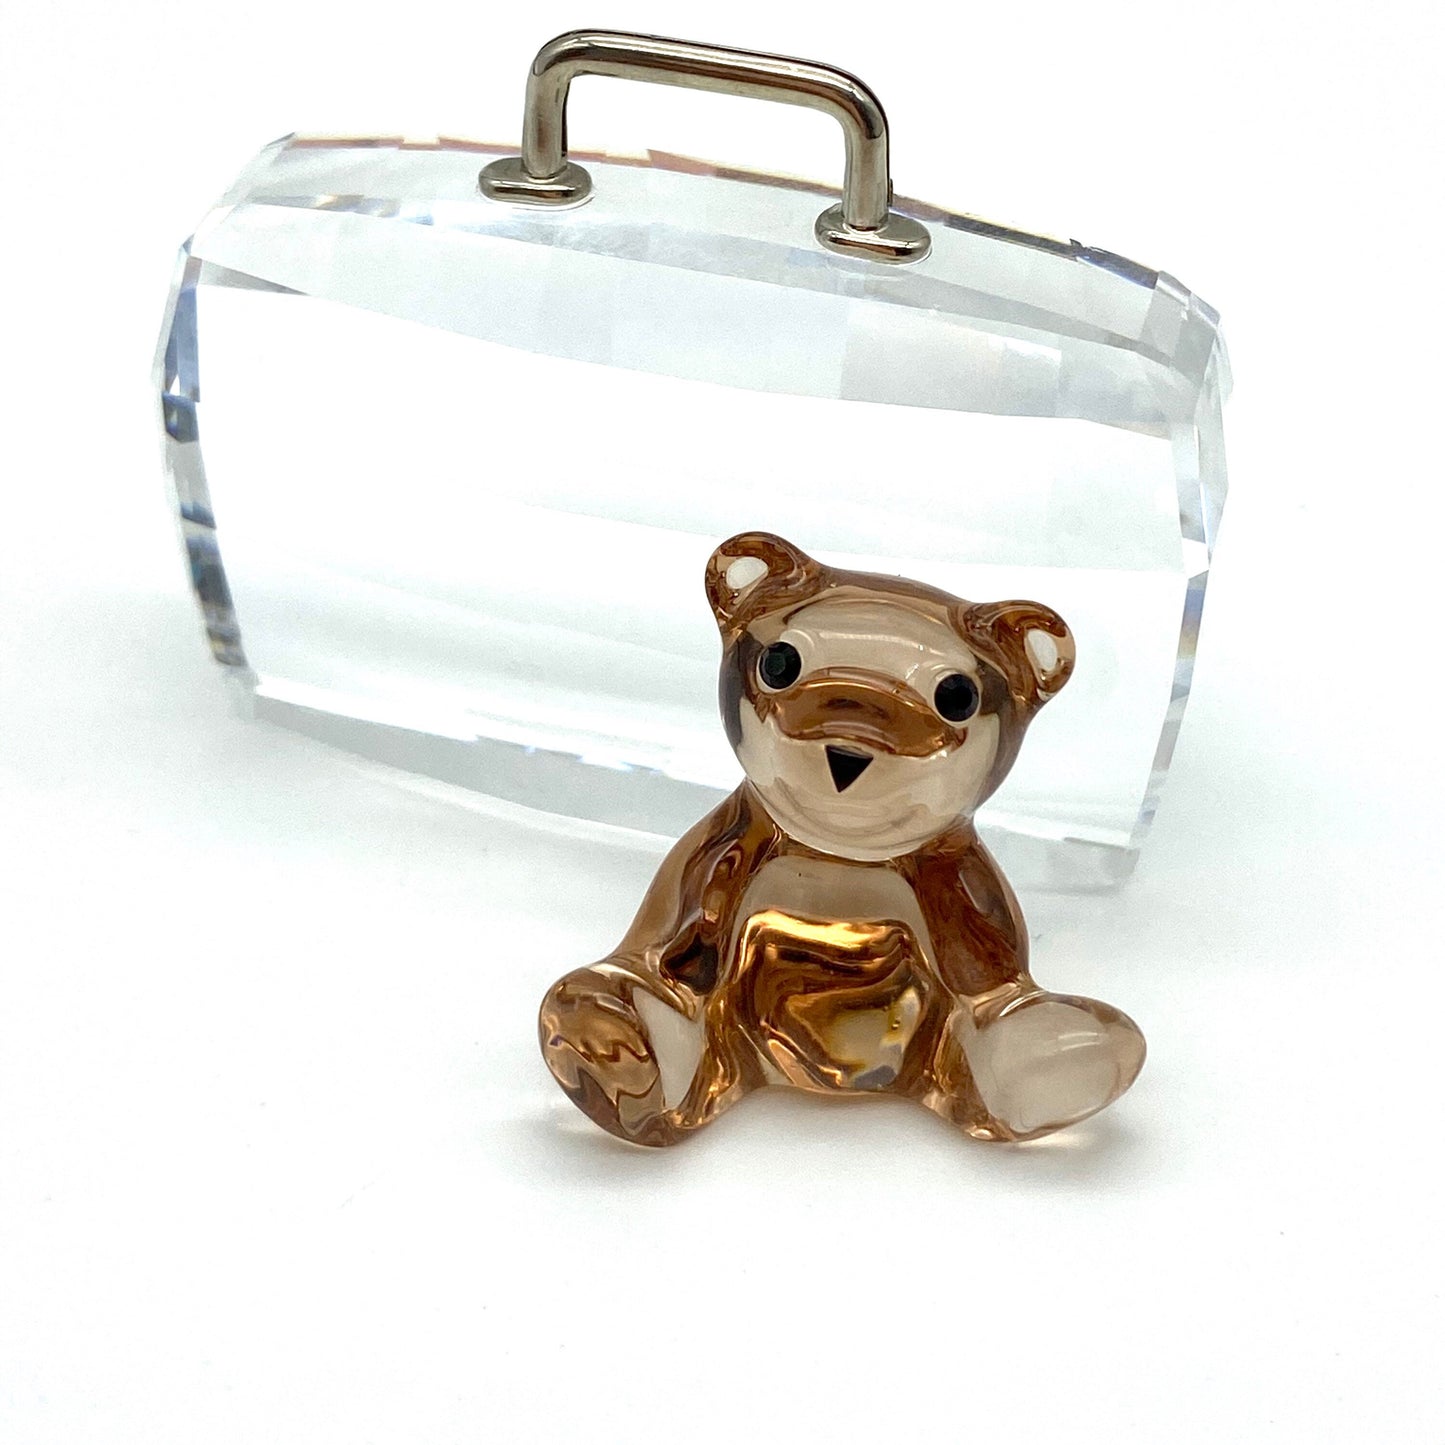 Swarovski Teddy Bear and Suitcase Cardholder 296338